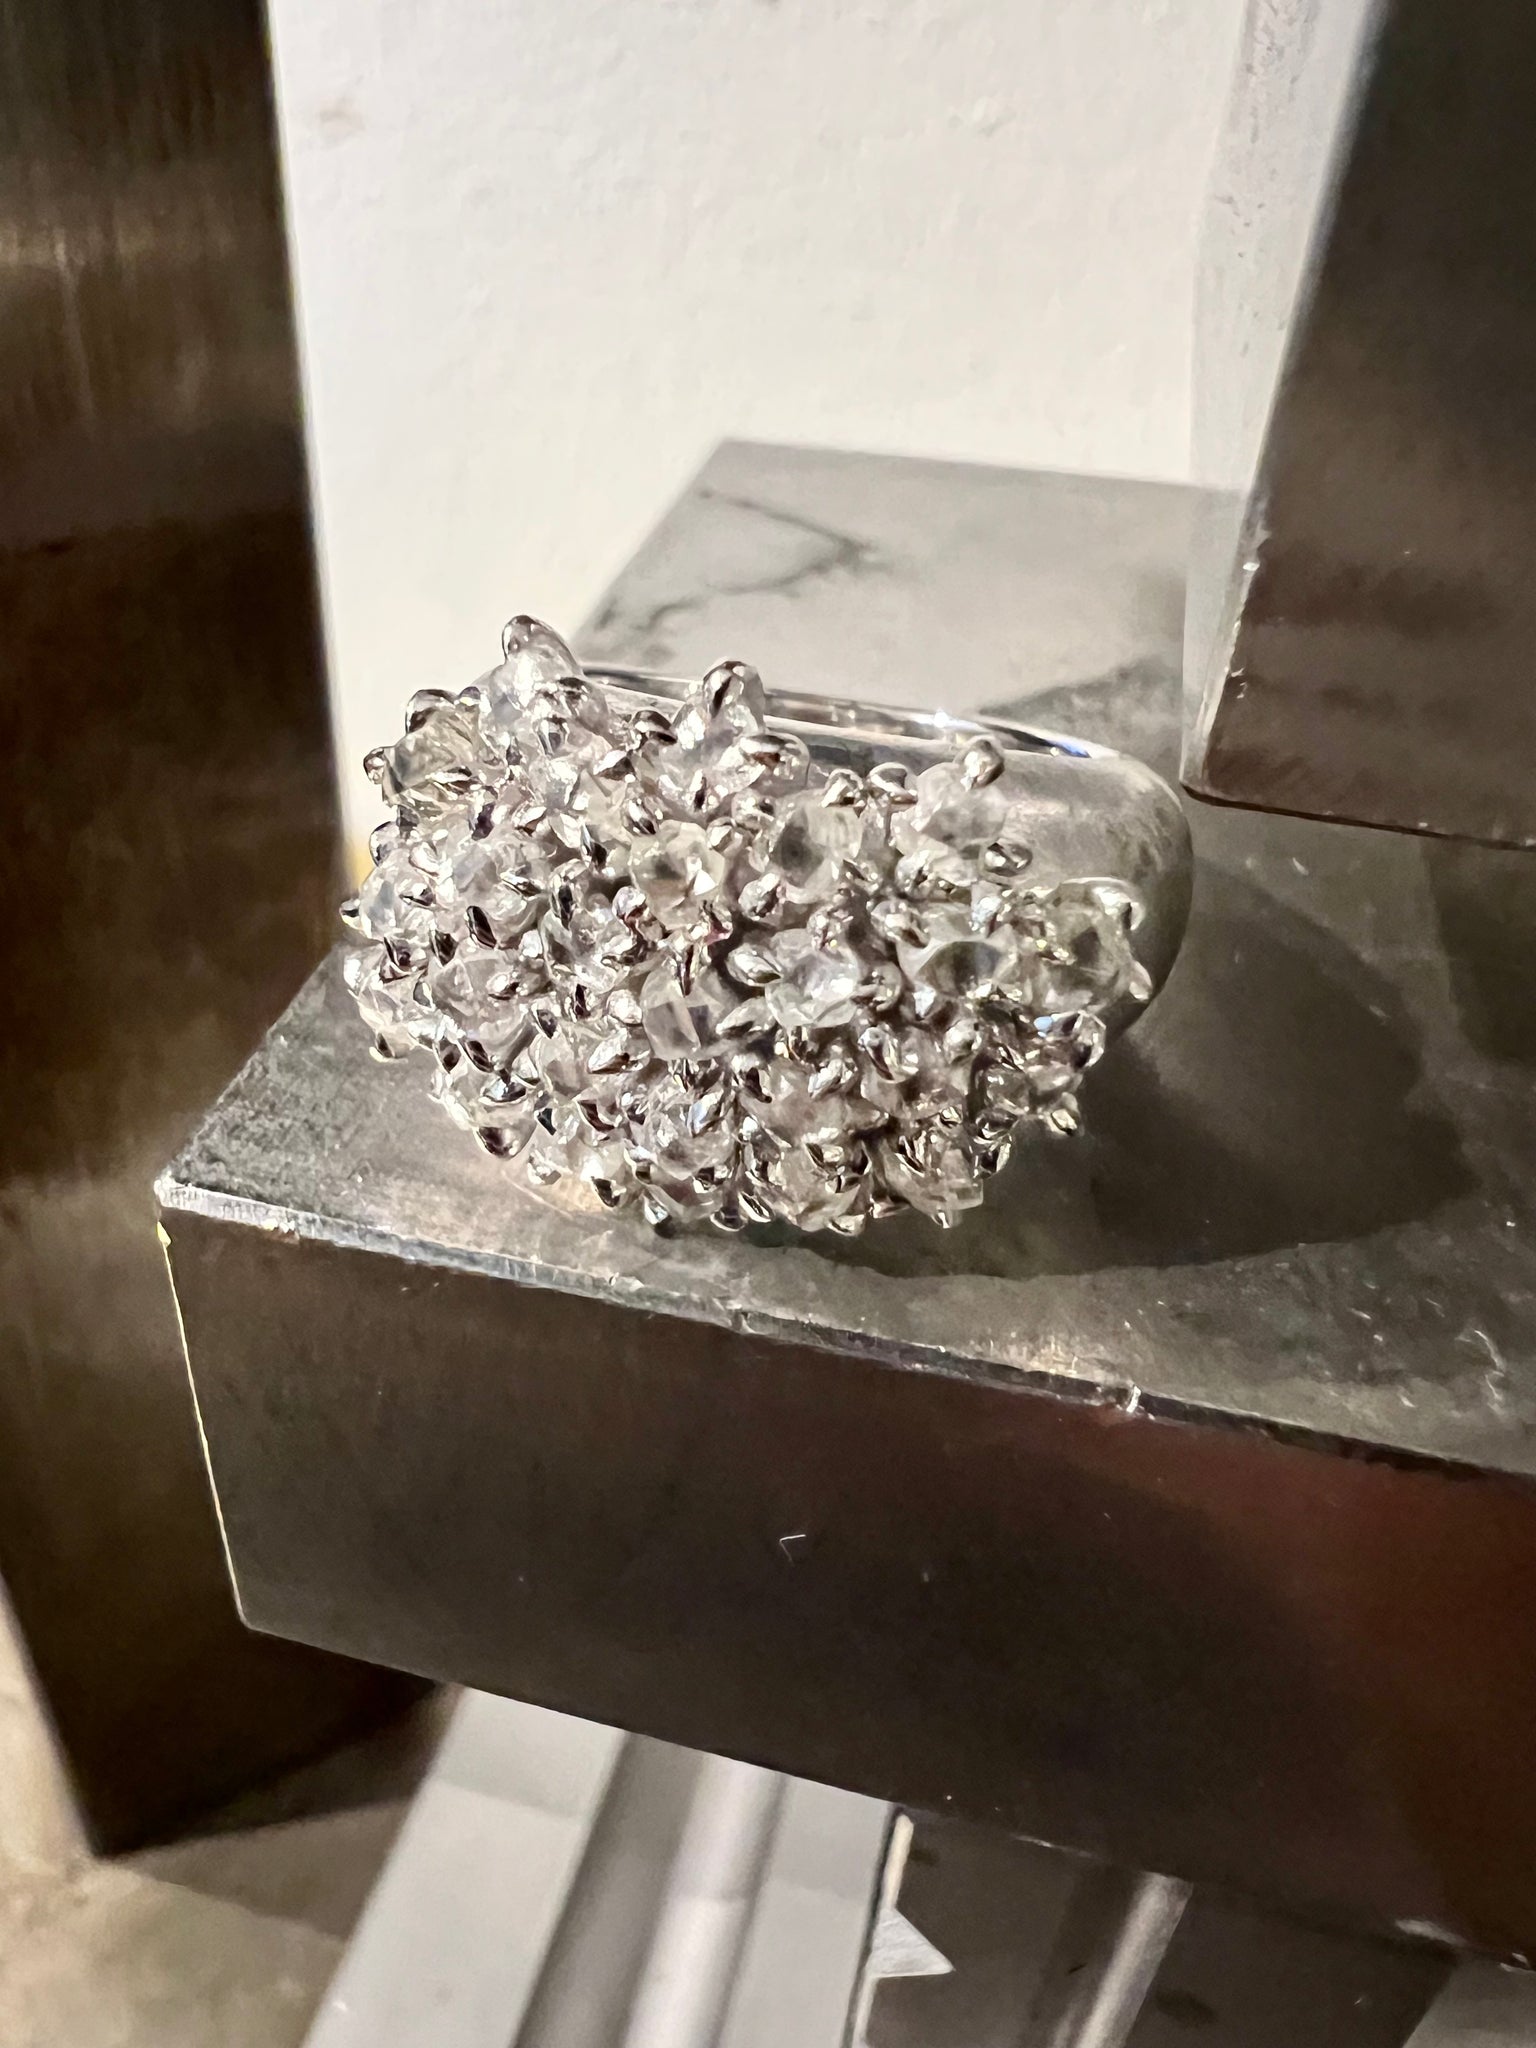 Star Sprinkle of Raw Diamonds – 2.41 ct.